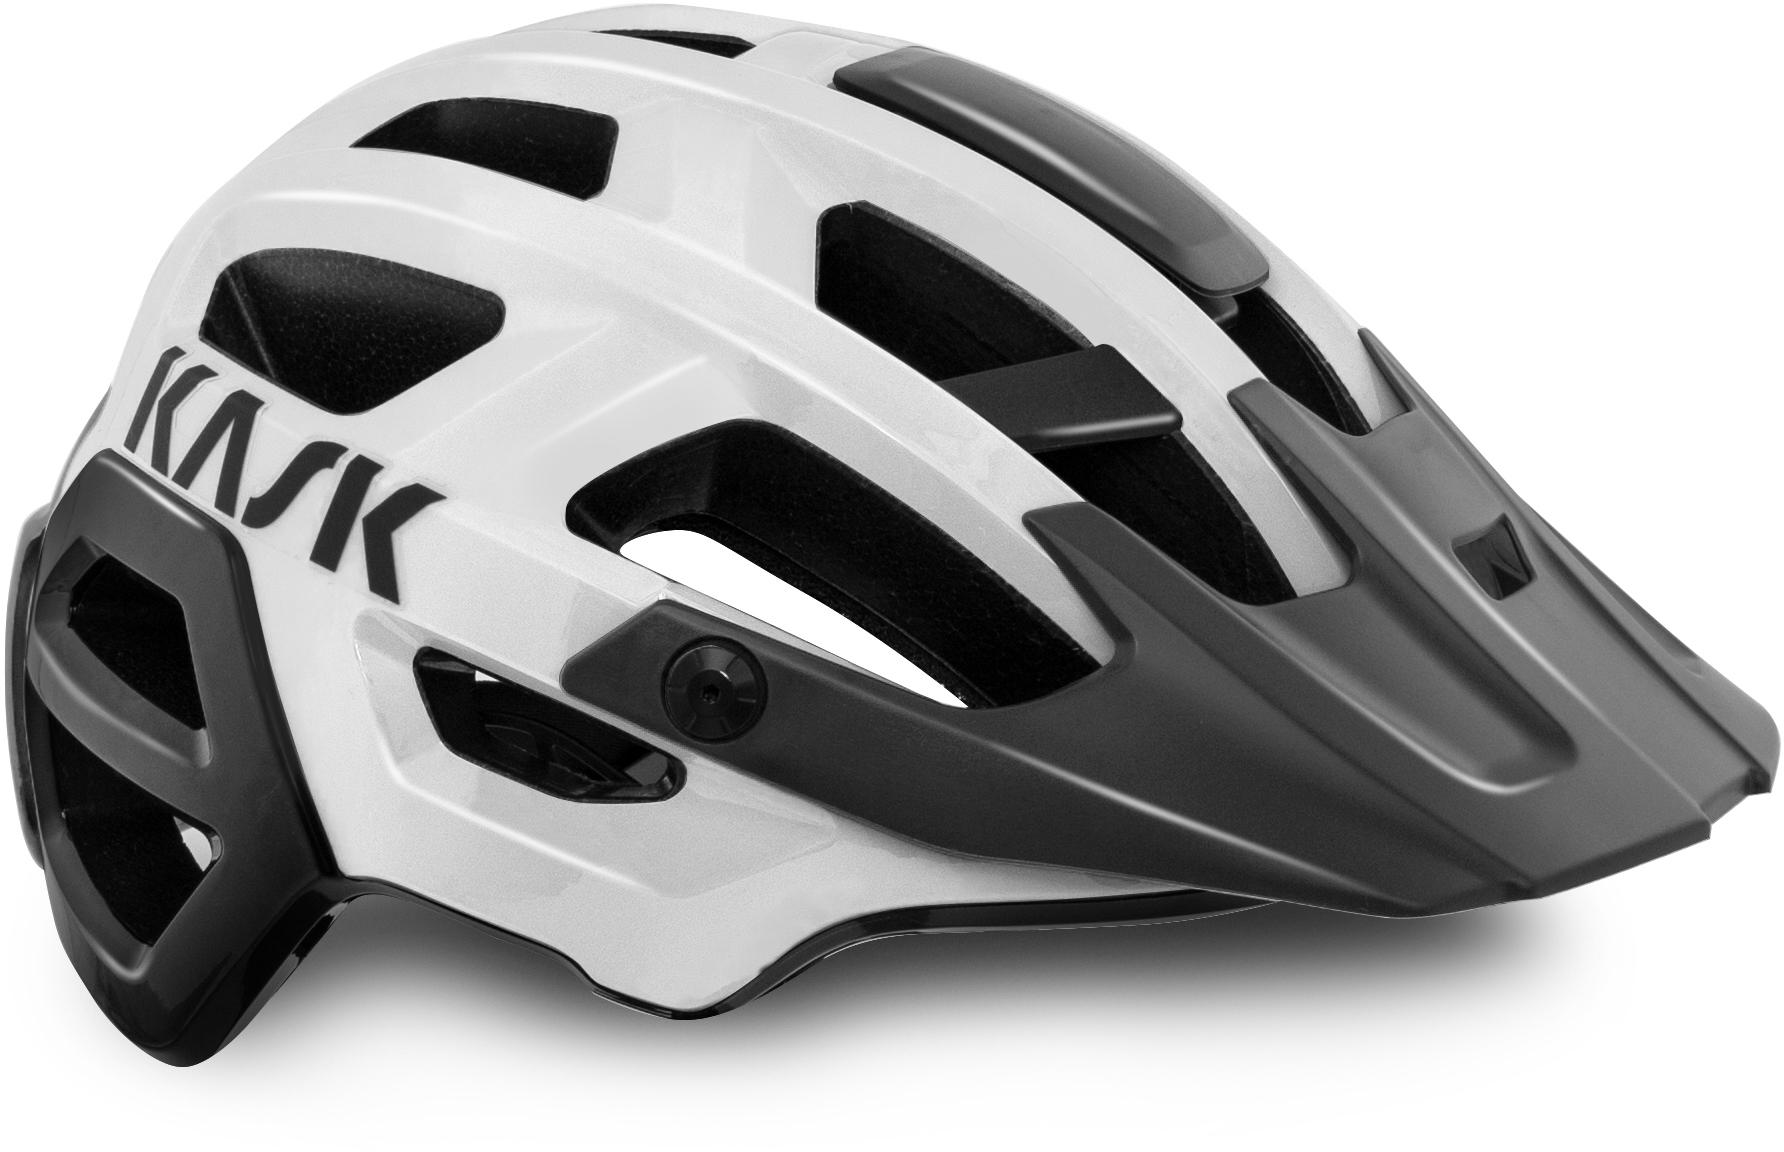 Kask Protone Wg11 Road Helmet, White, Medium